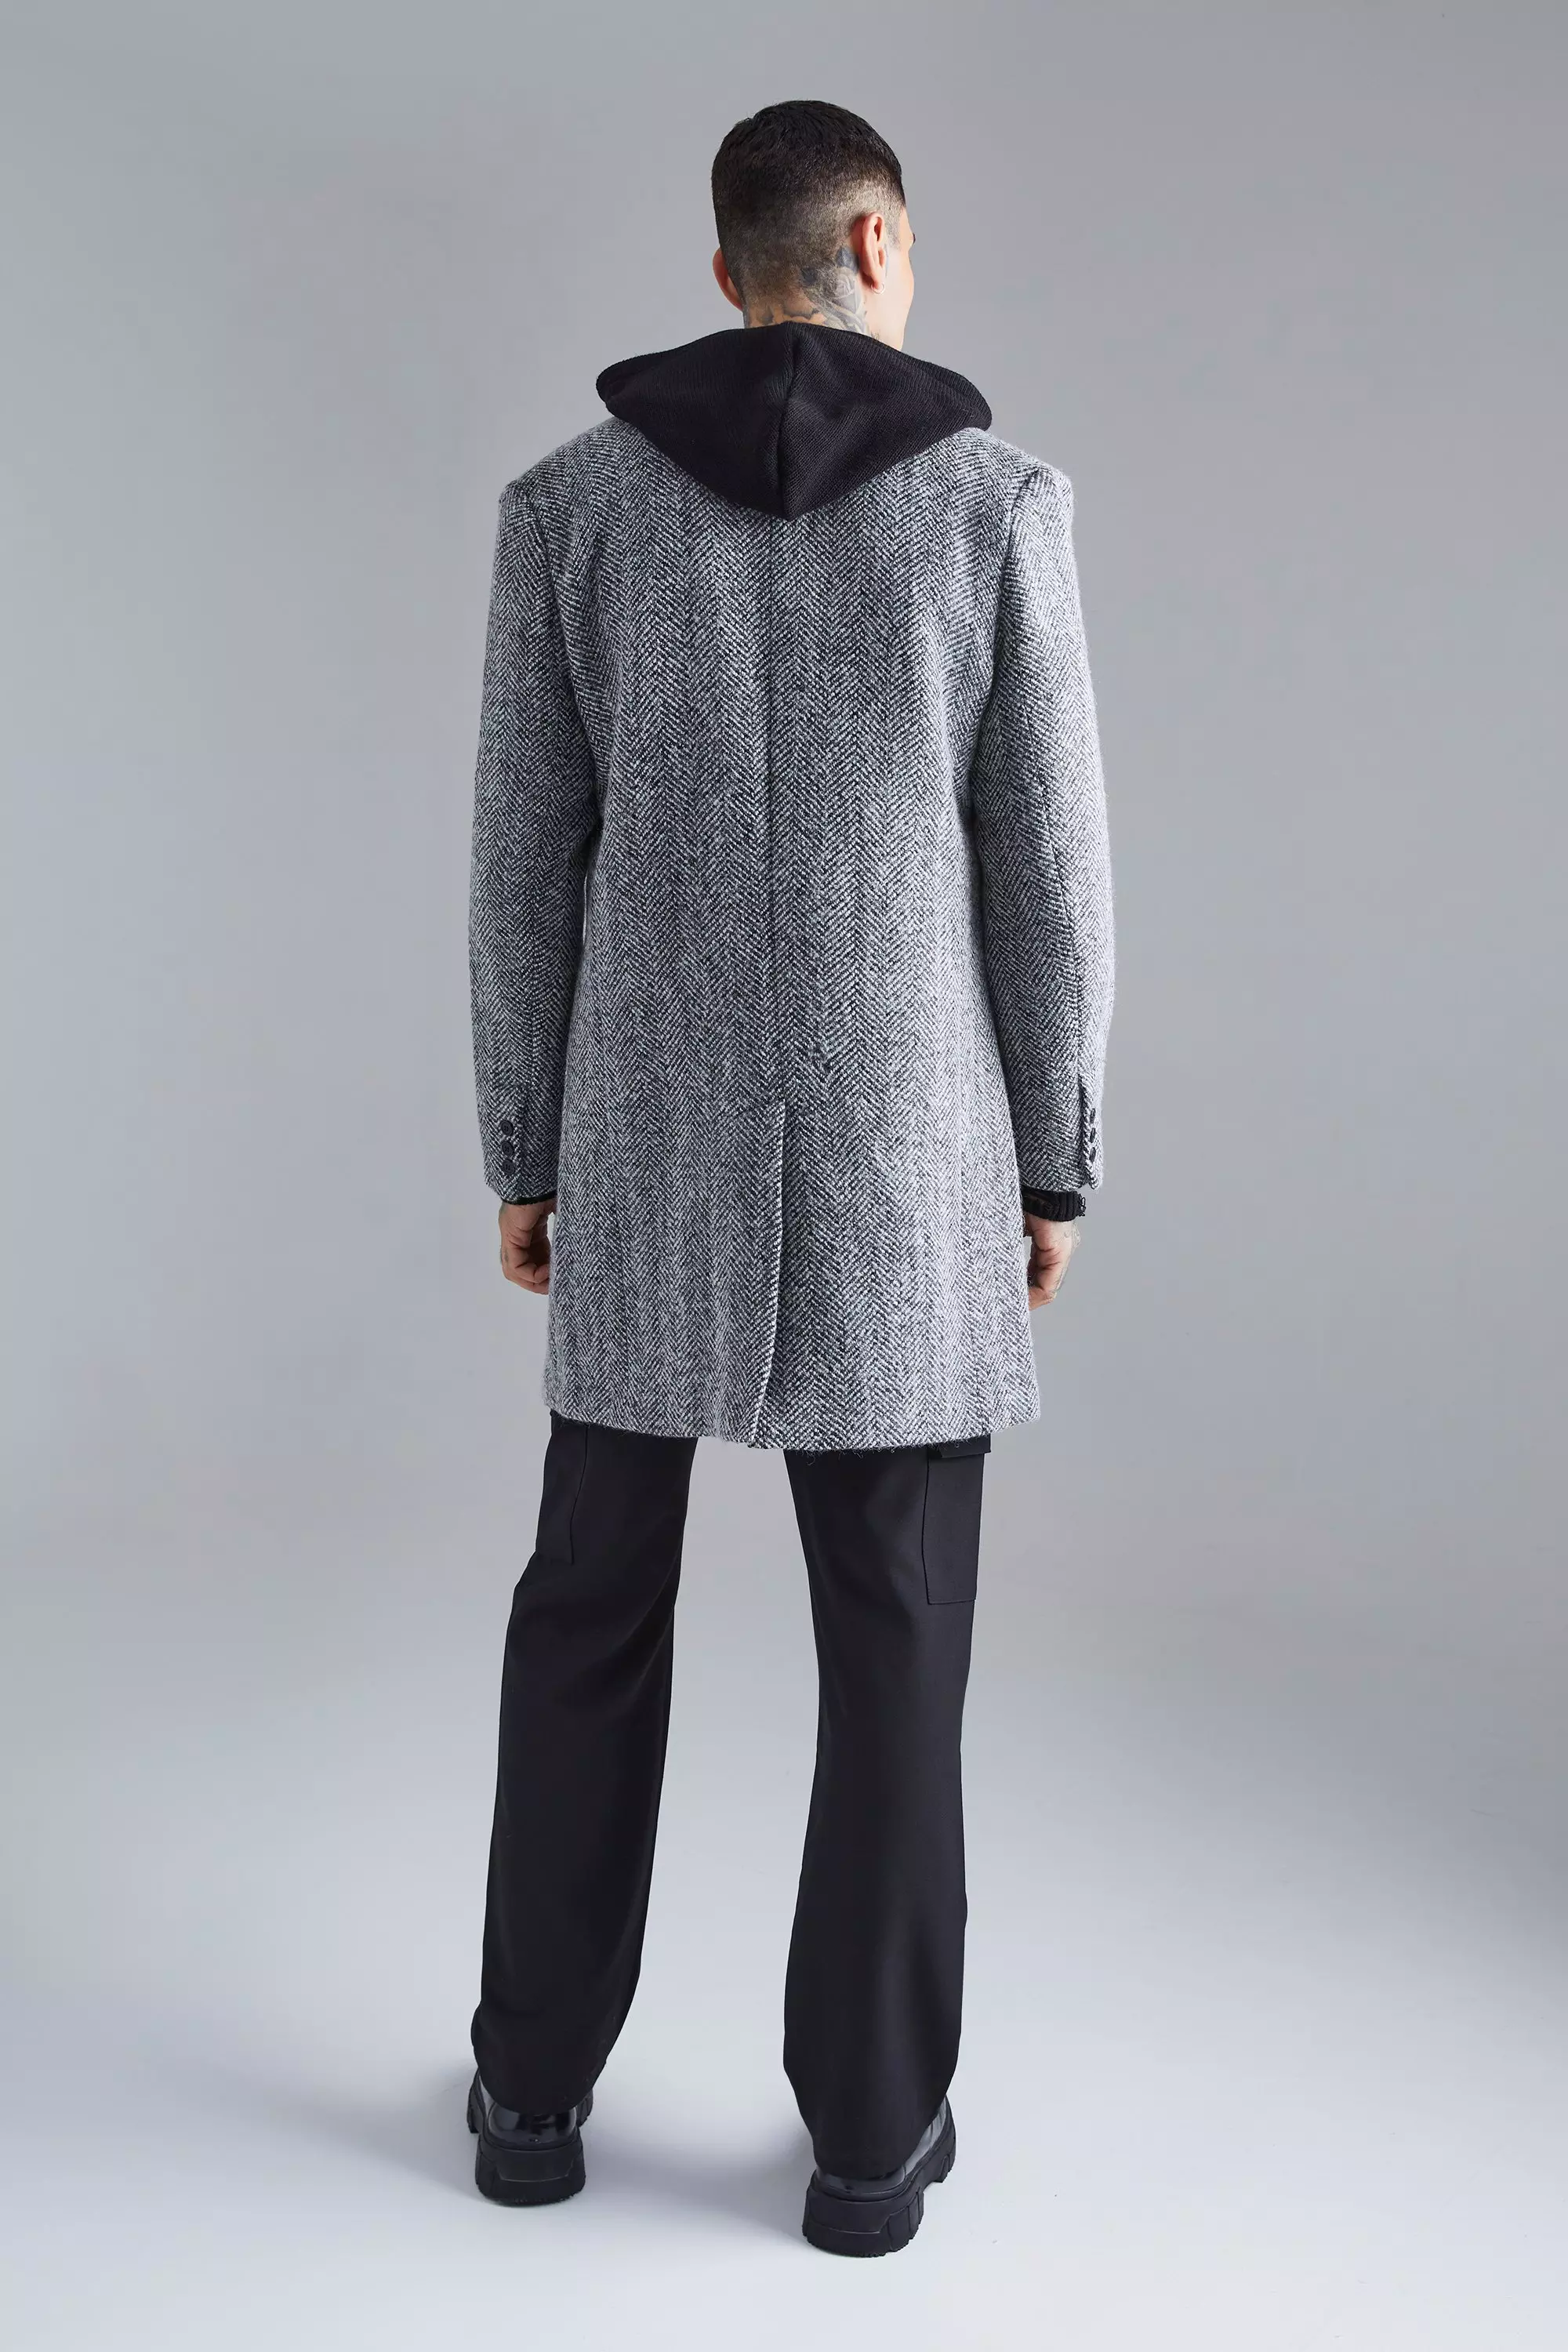 Braveman Men's Wool Blend Herringbone Top Coat Overcoat Topcoat Jacket Black / Small